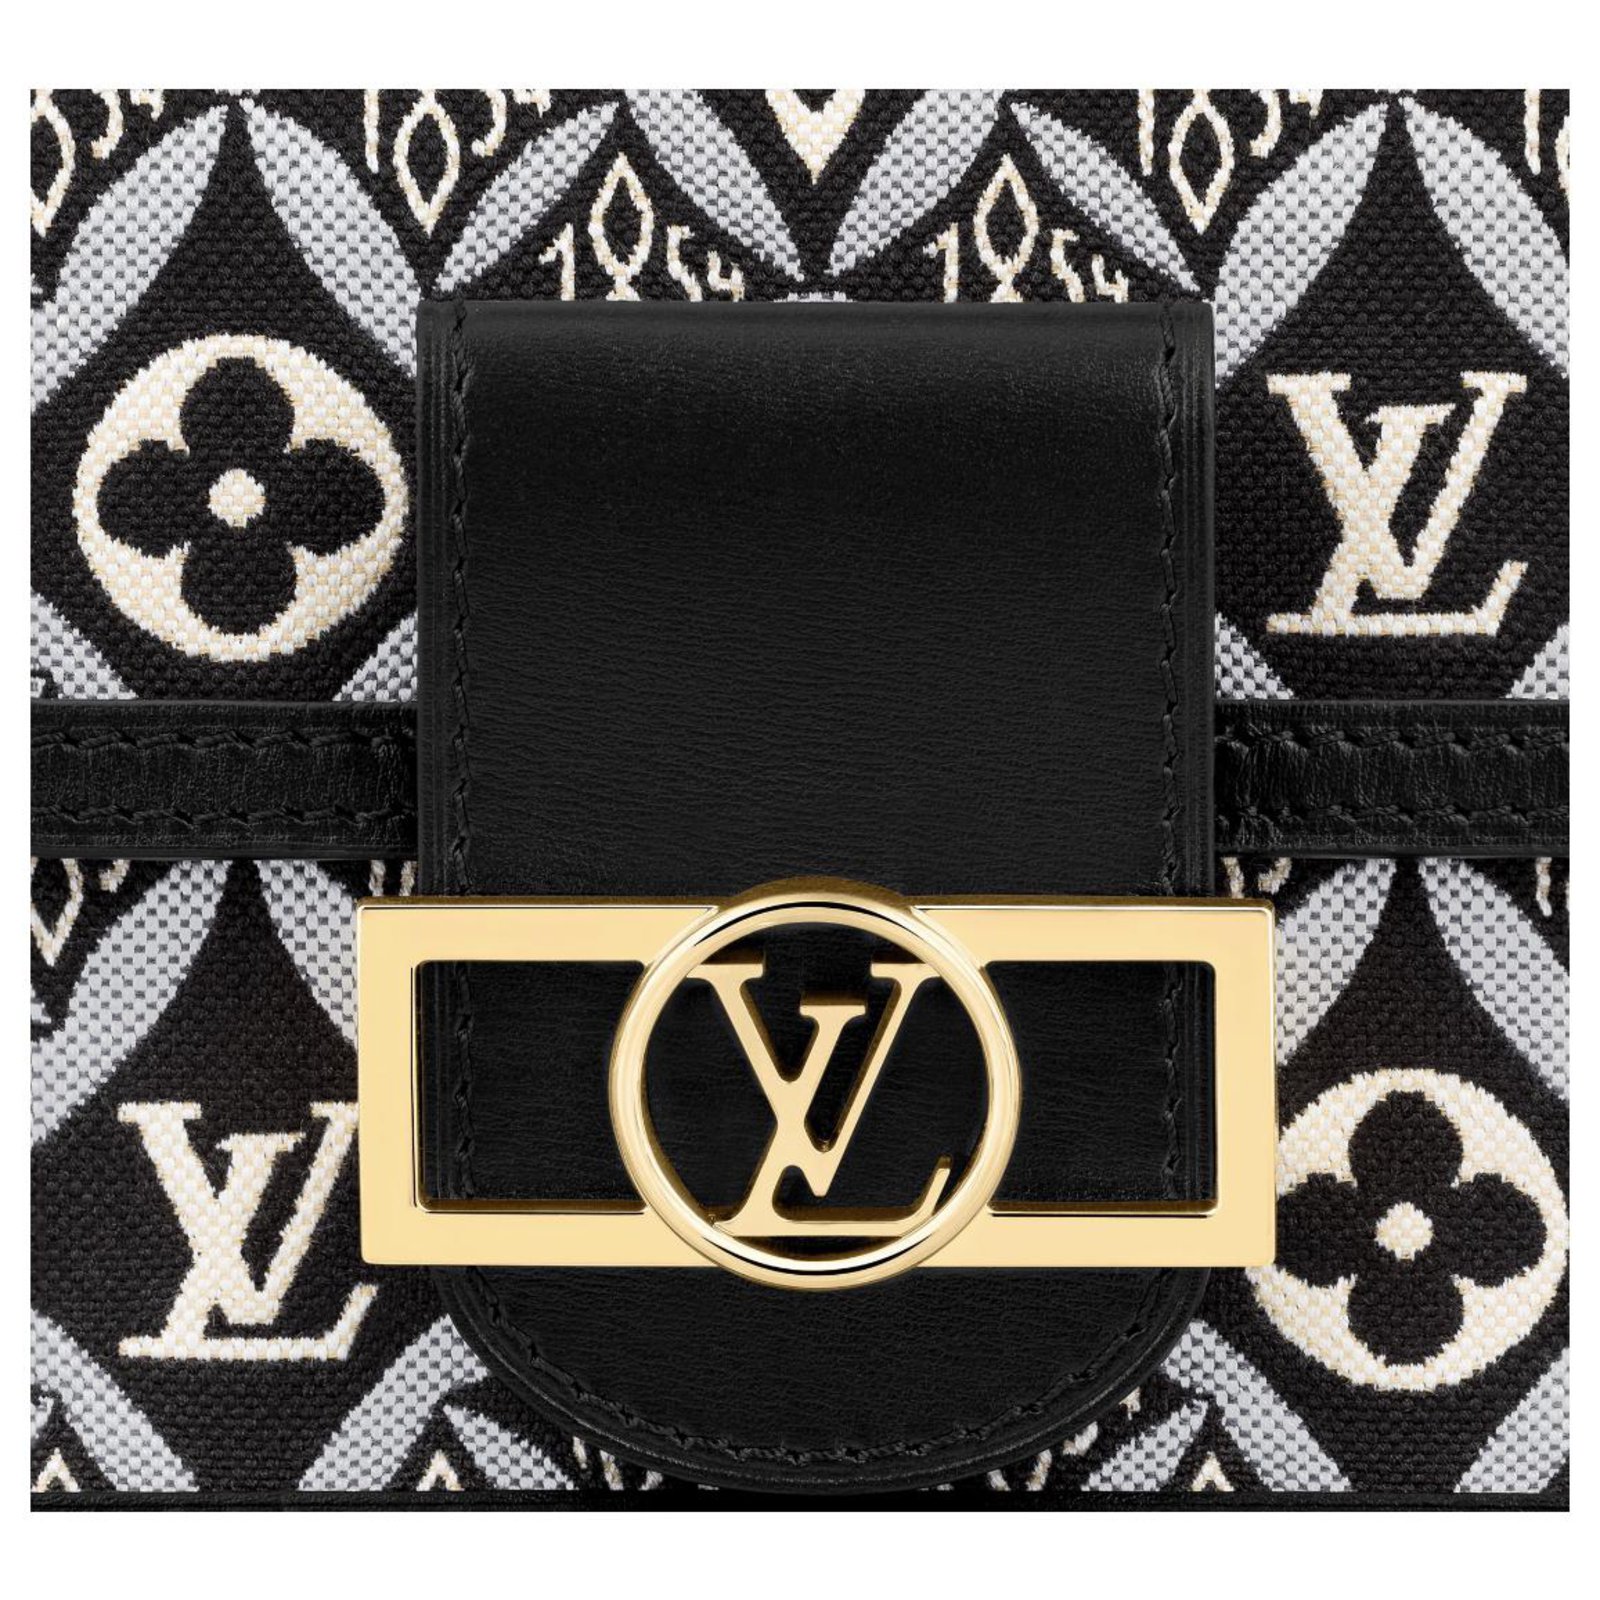 Louis Vuitton Black, Pattern Print Since 1854 Dauphine Chain Wallet